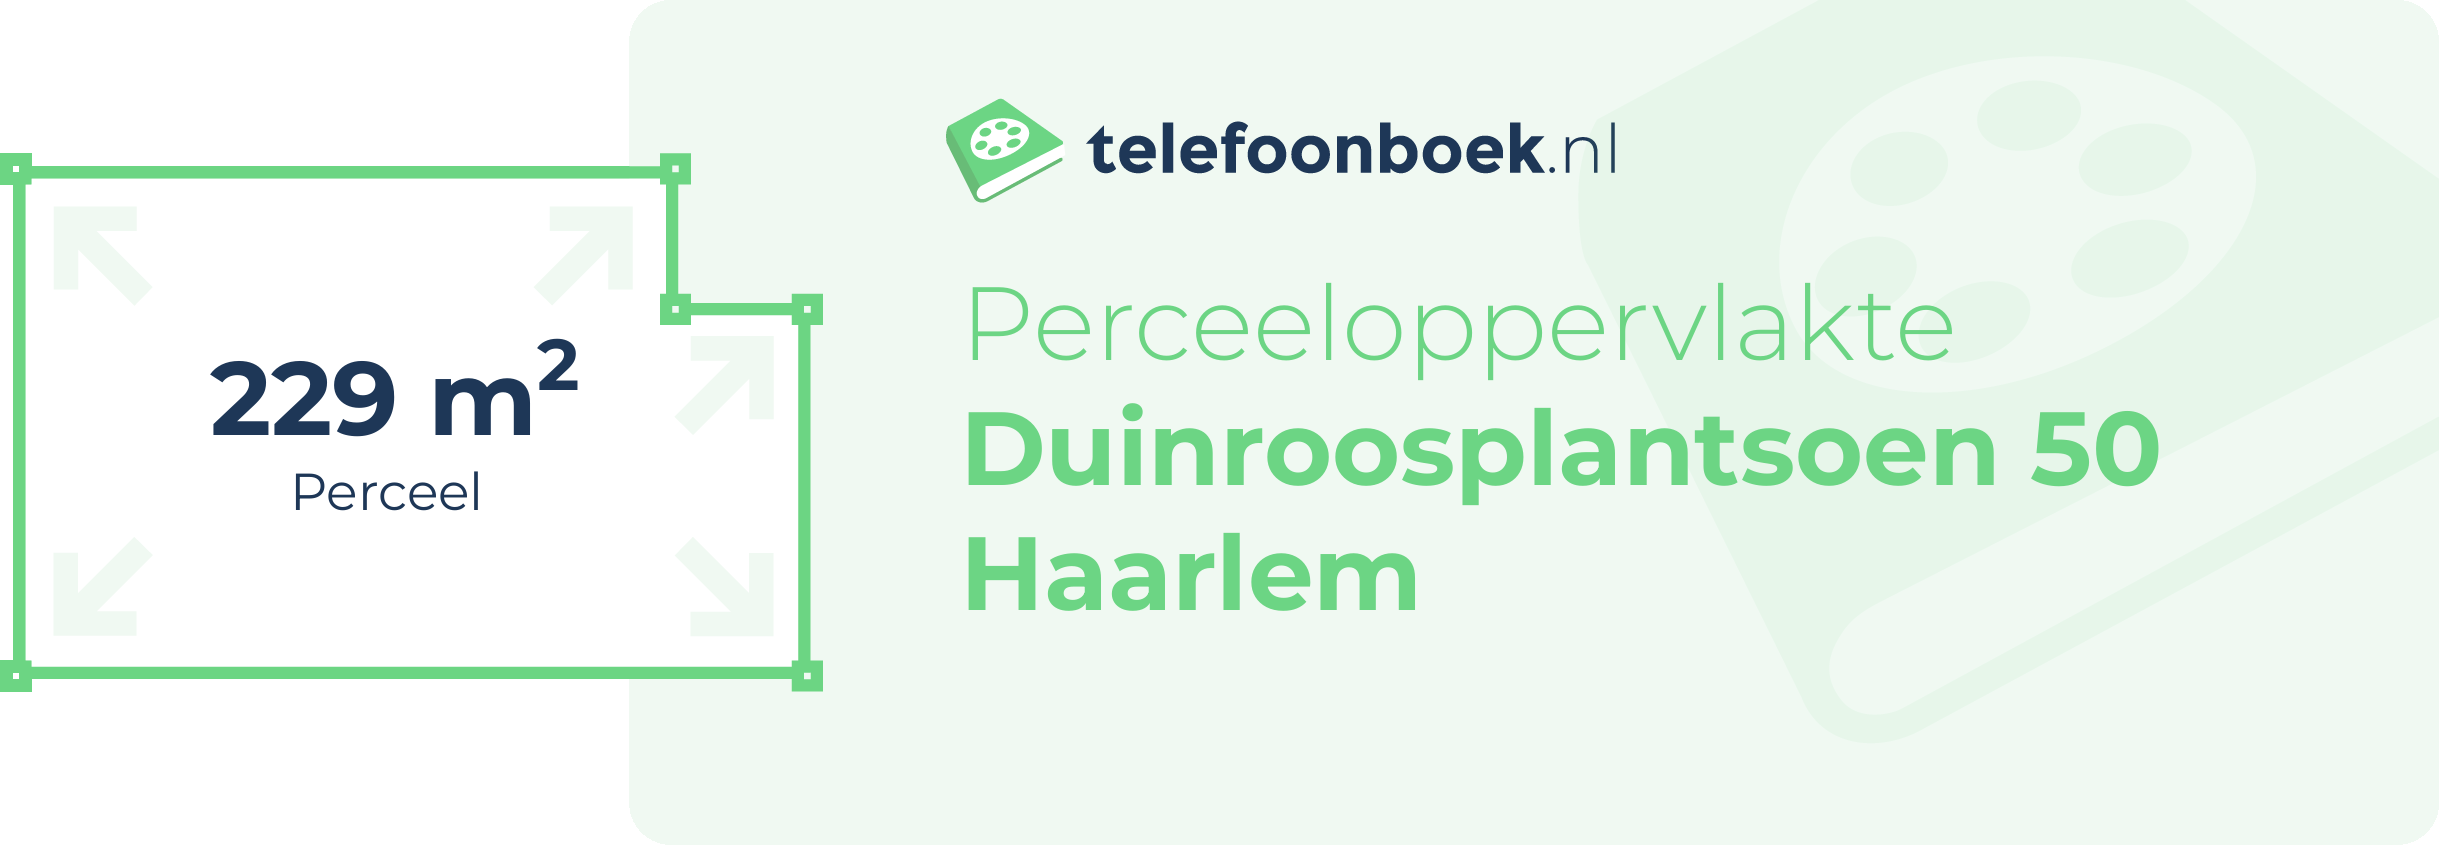 Perceeloppervlakte Duinroosplantsoen 50 Haarlem